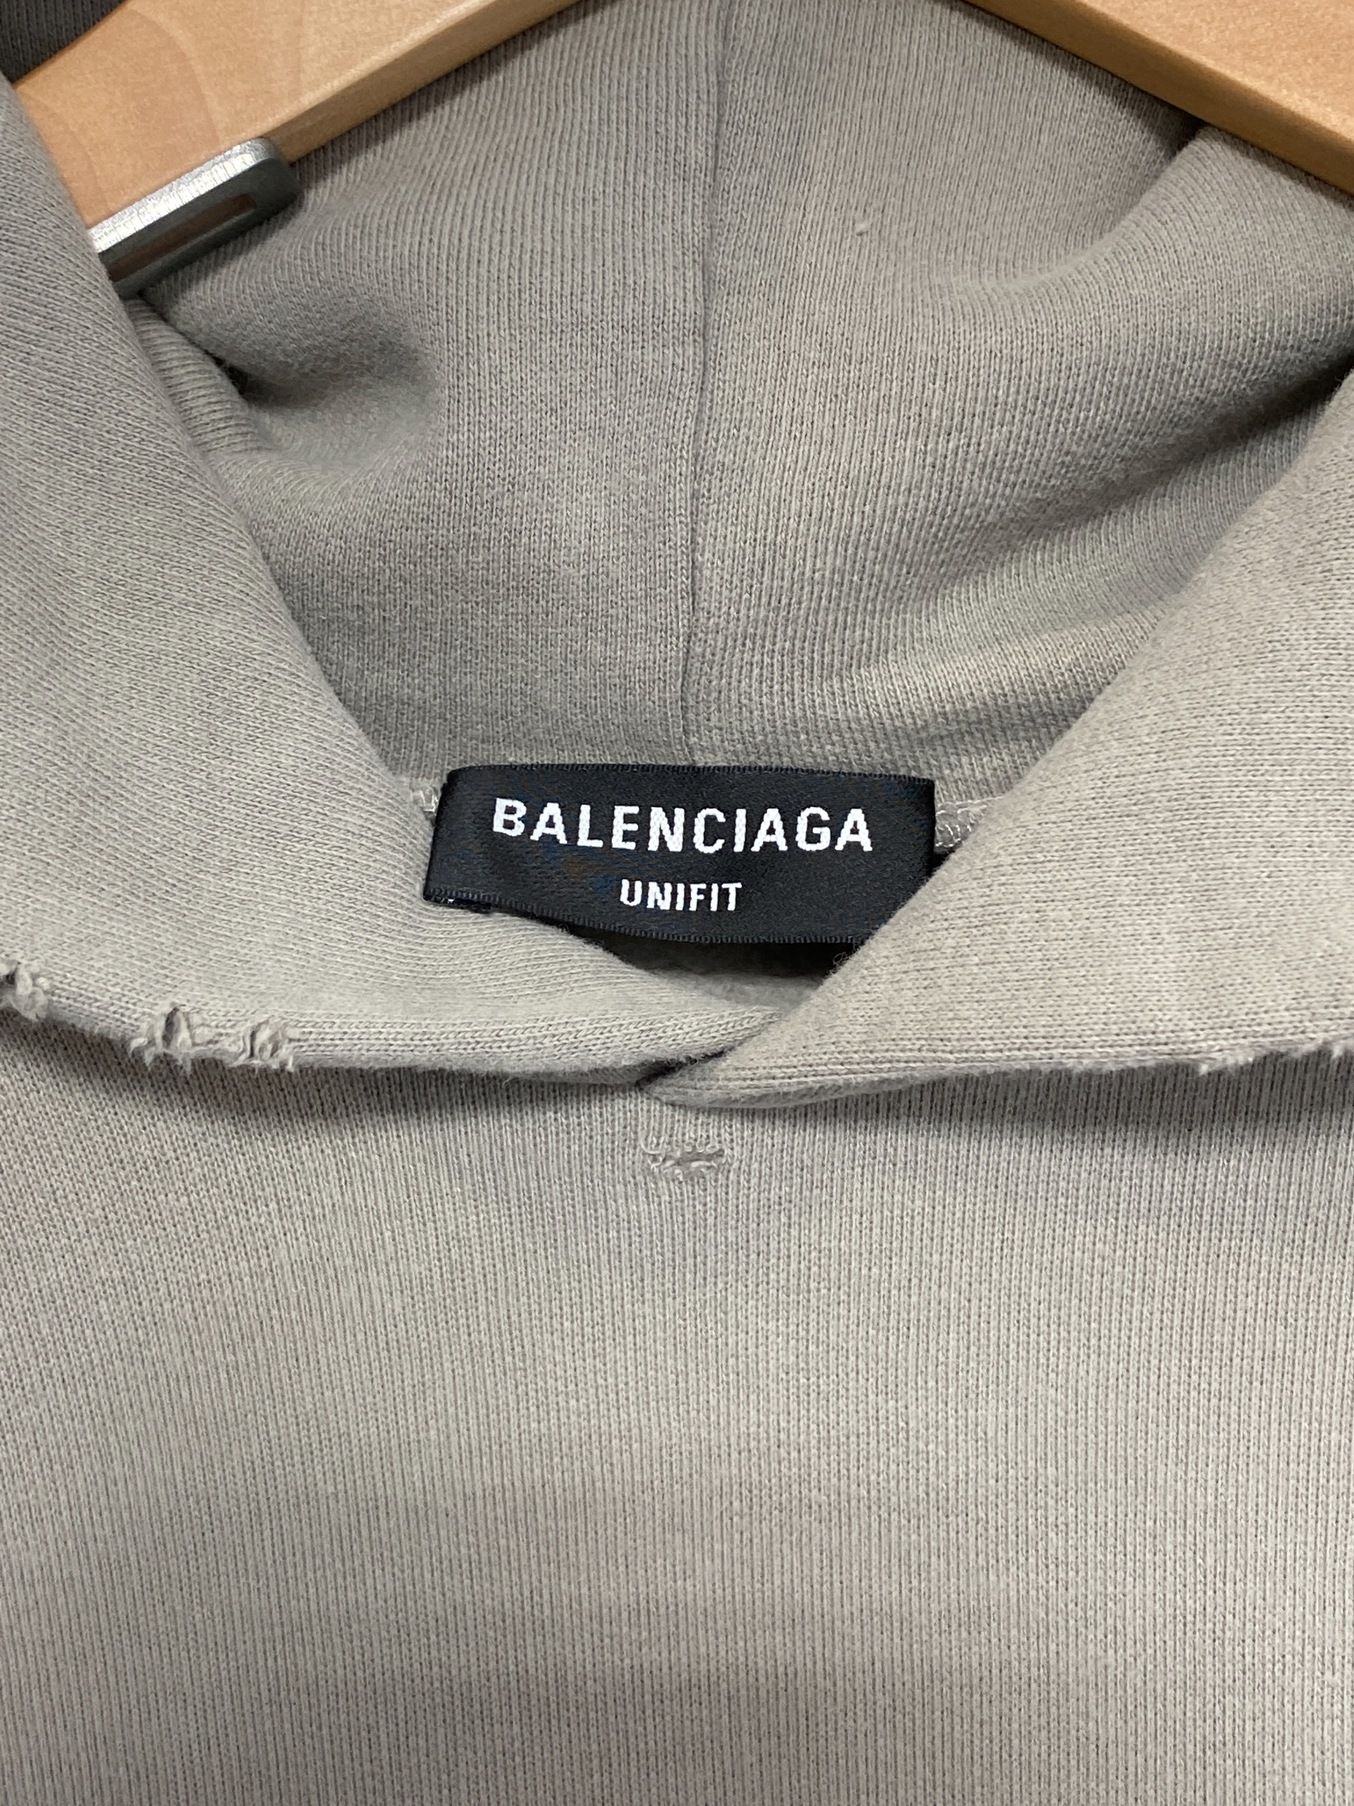 balenciaga バレンシアガ ロゴ Sサイズ 限定金額送料無料 